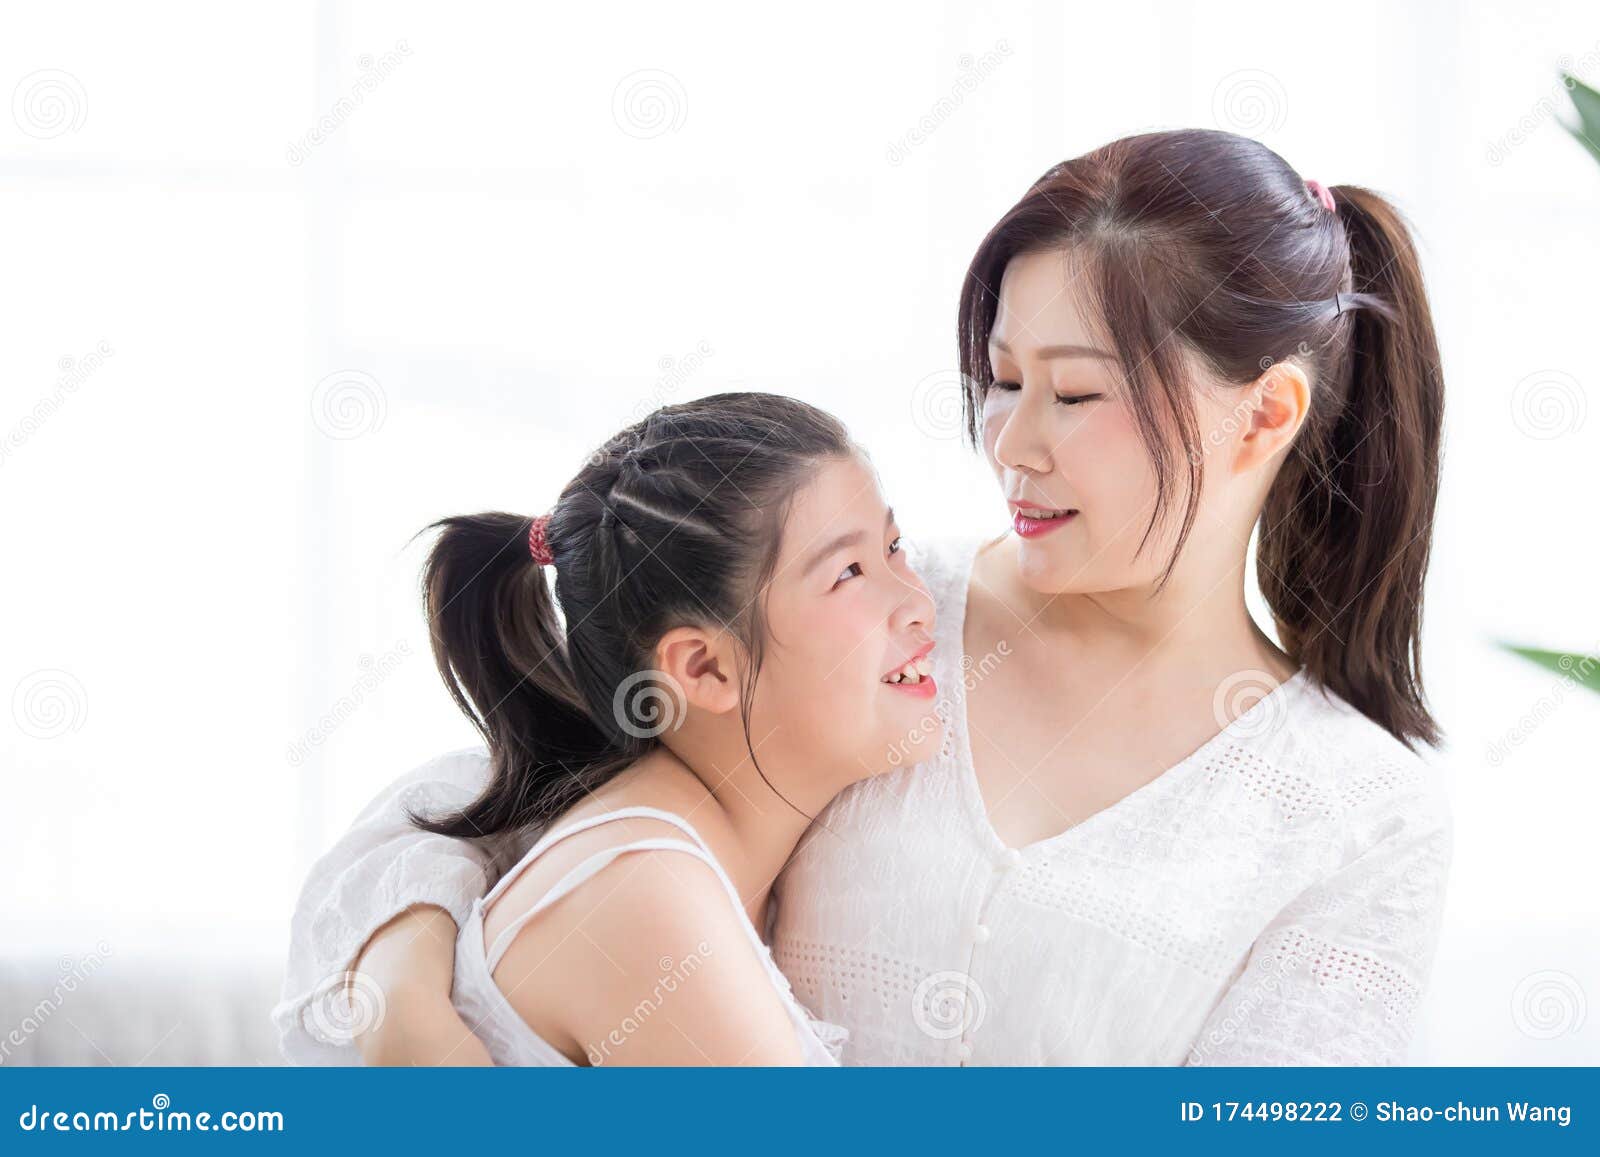 lesbian japanese mom daughter free pics hd